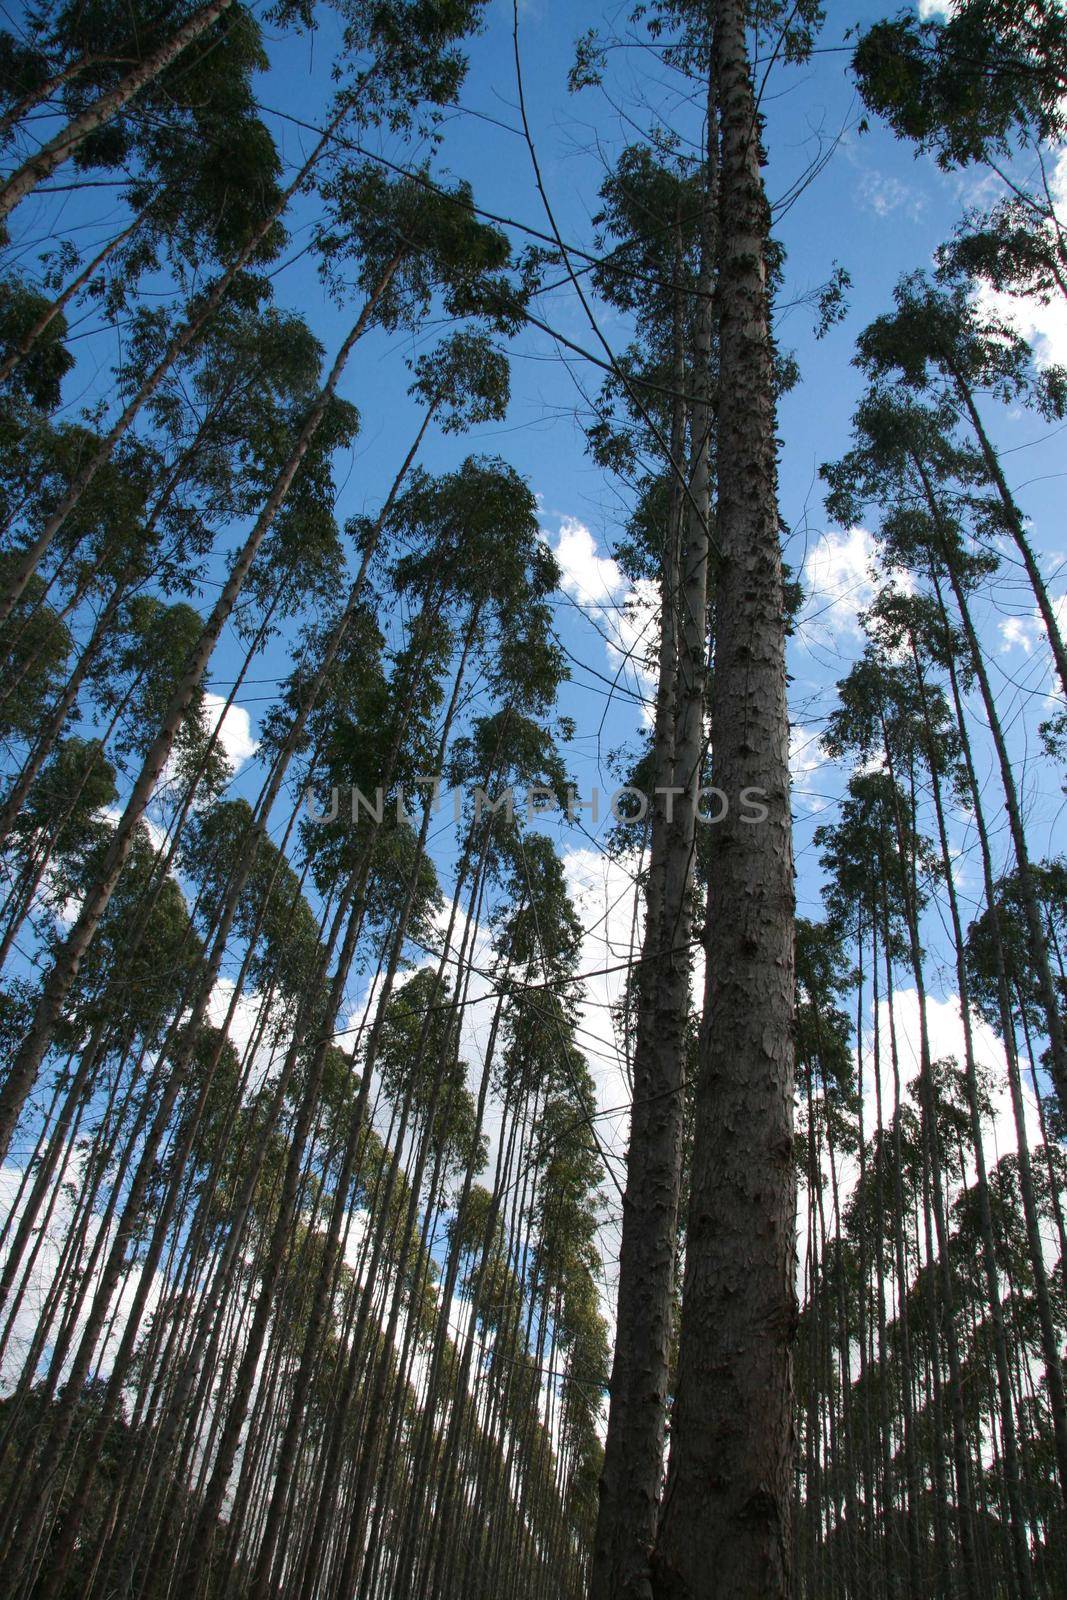 eunapolis, bahia, brazil - july 30, 2008: eucalyptus tree plantation for pulp production in southern Bahia.